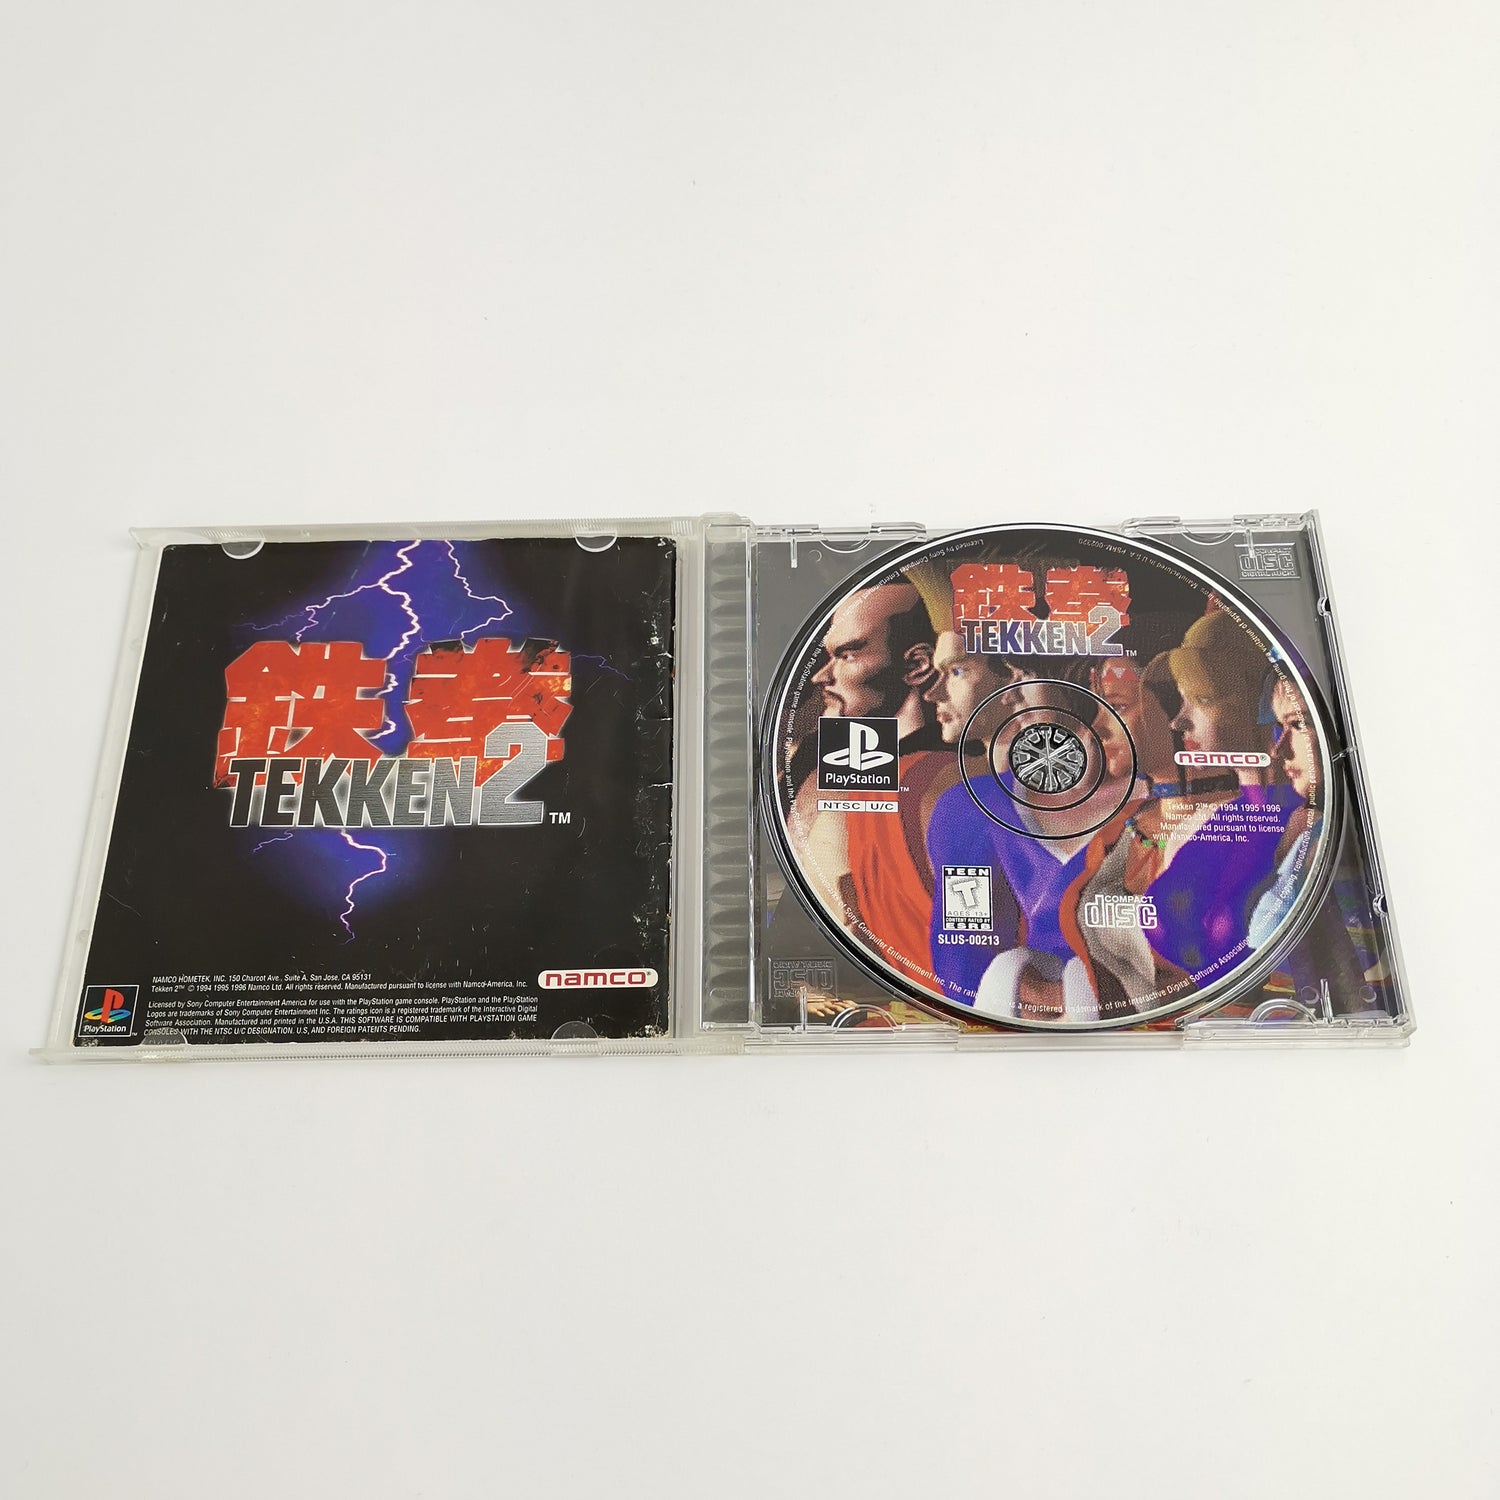 Sony Playstation 1 Spiel : Tekken 2 | PS1 PSX - OVP NTSC-U/C USA